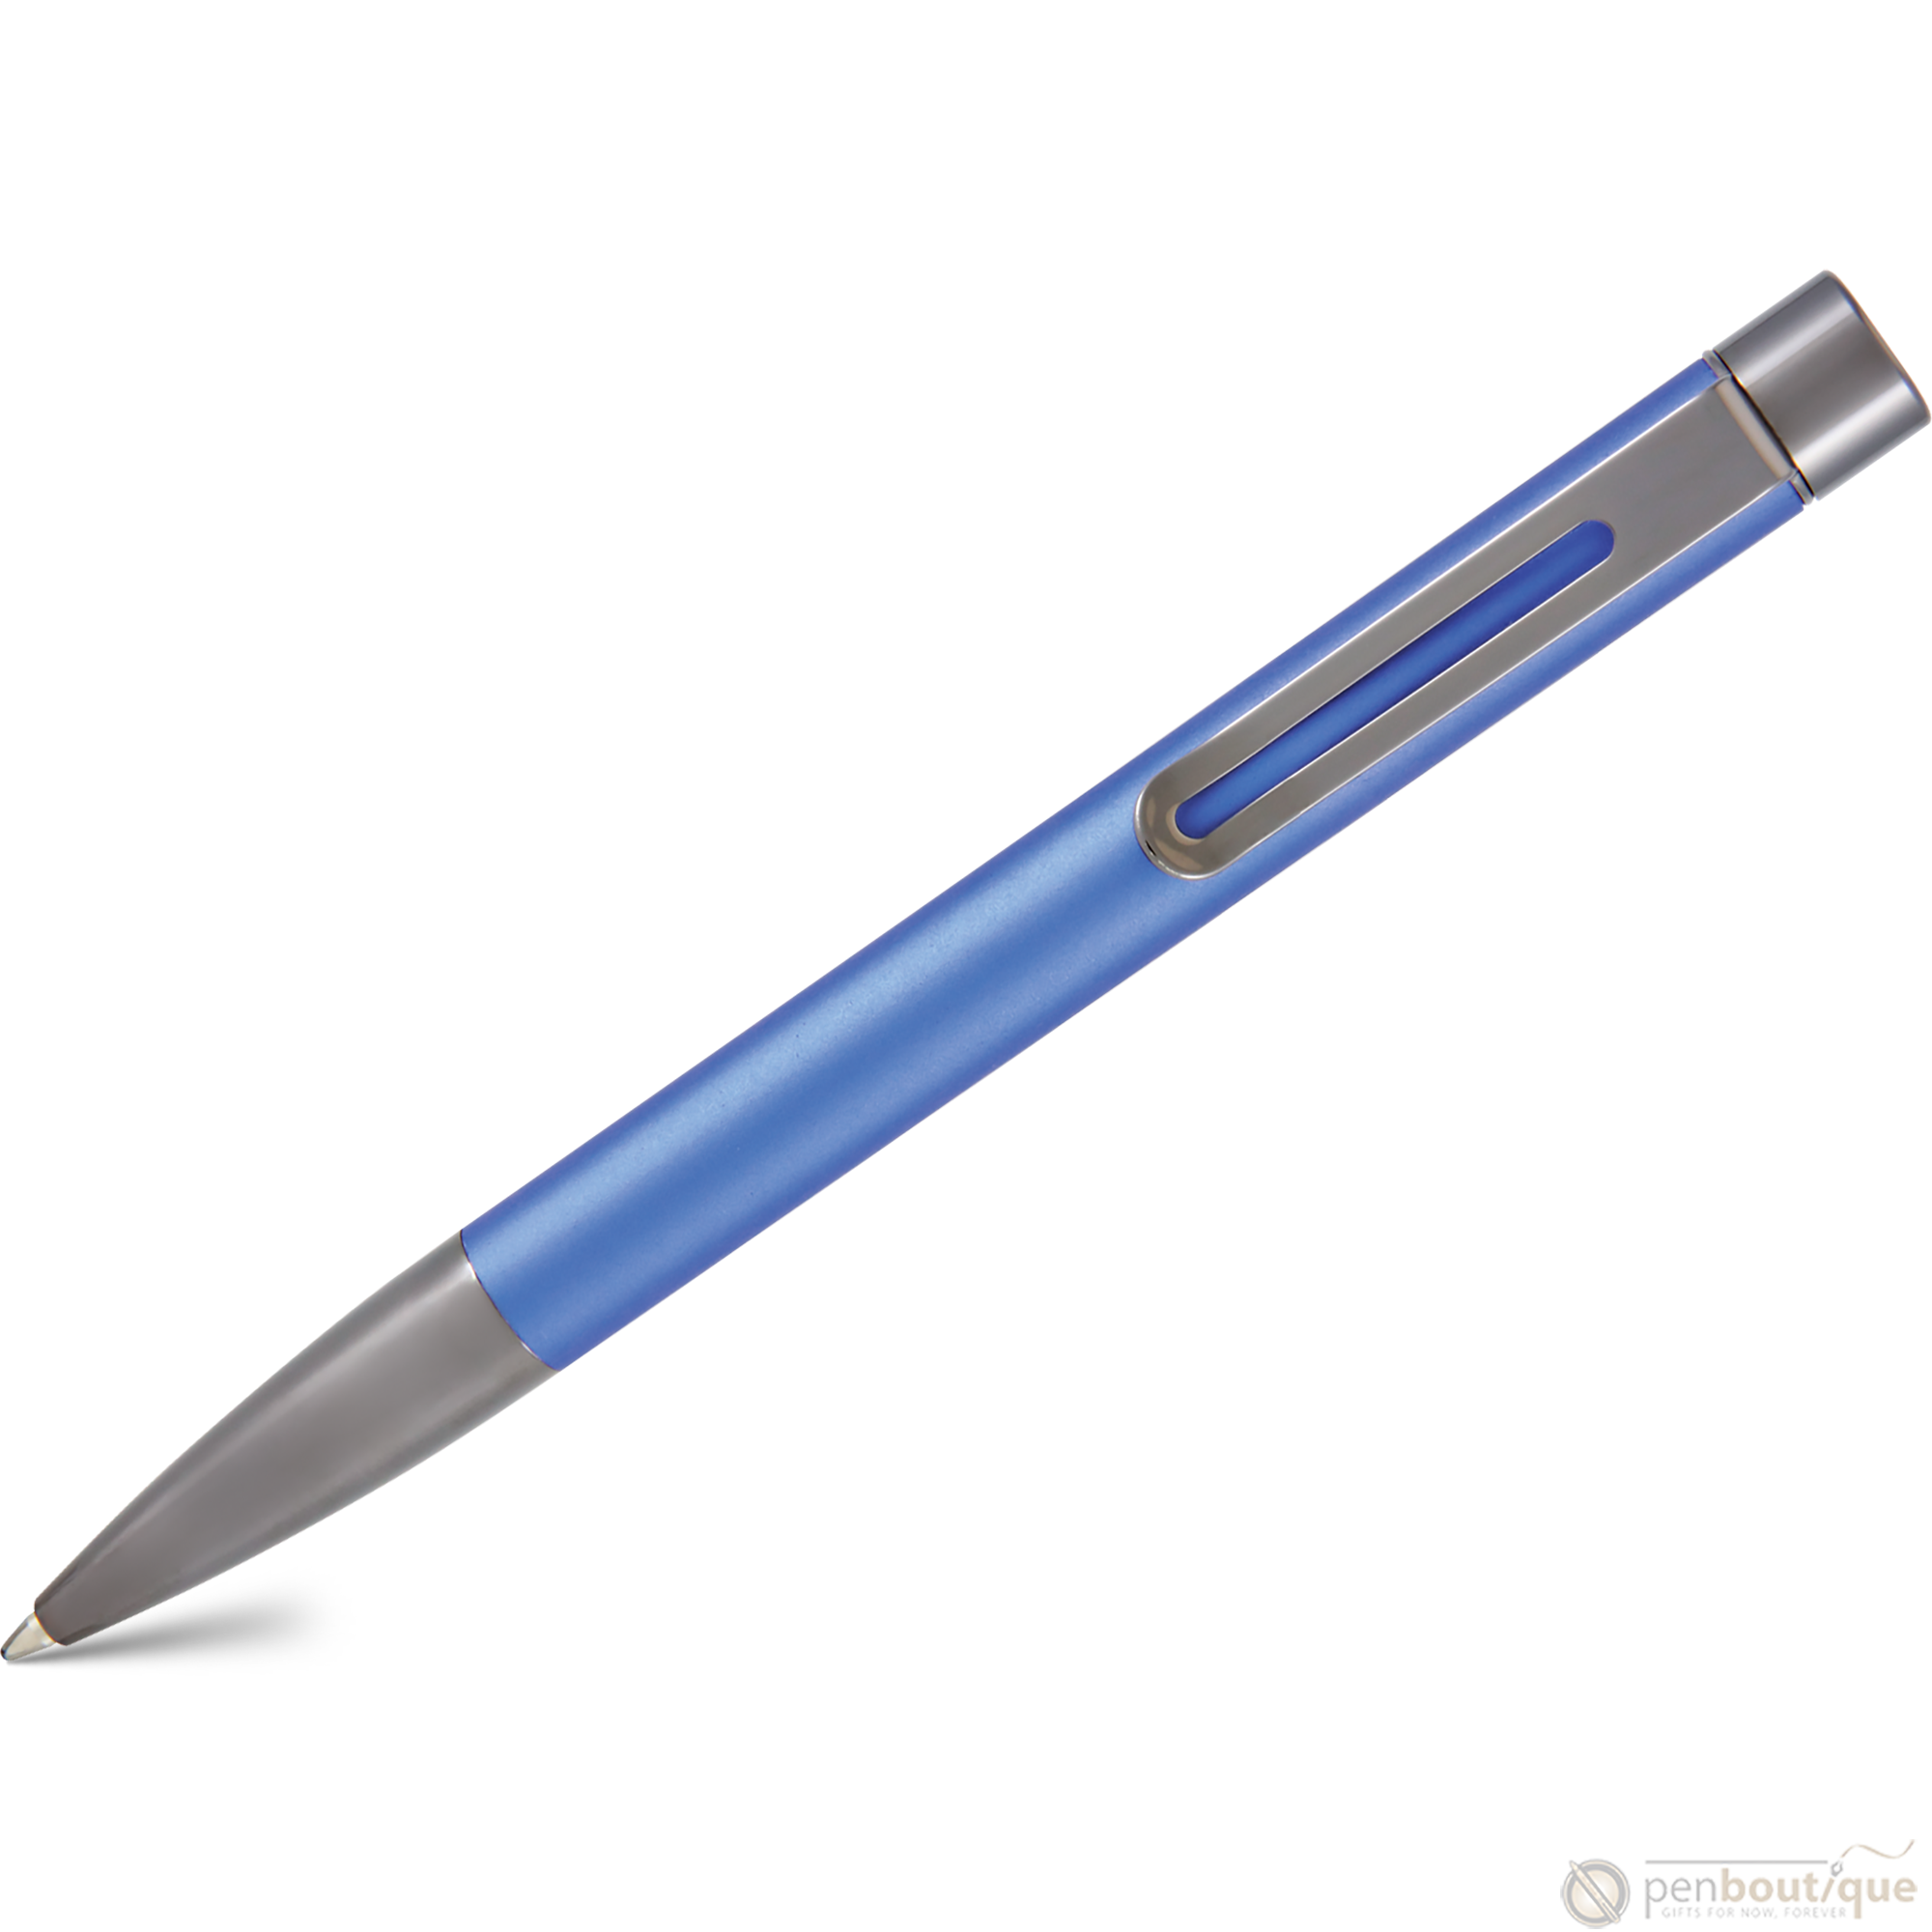 Monteverde Ritma Ballpoint Pen - Blue-Pen Boutique Ltd